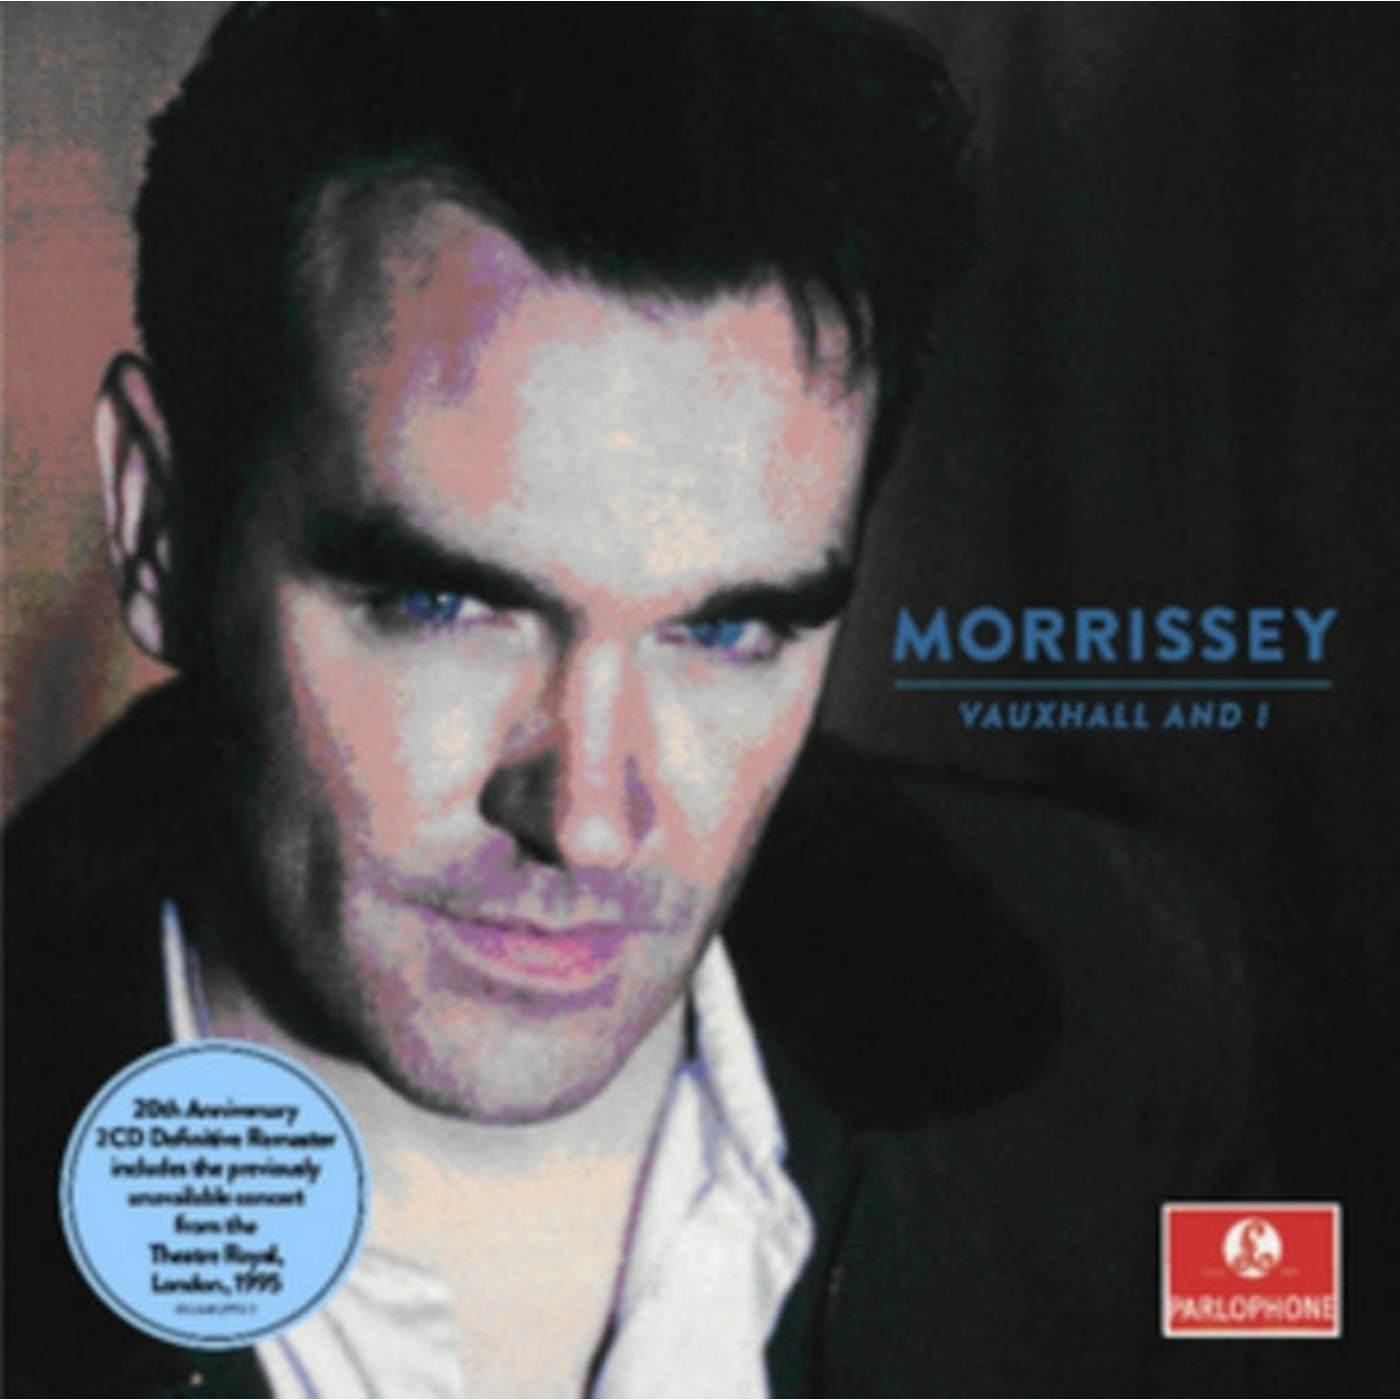 Morrissey LP Vinyl Record - Vauxhall And I